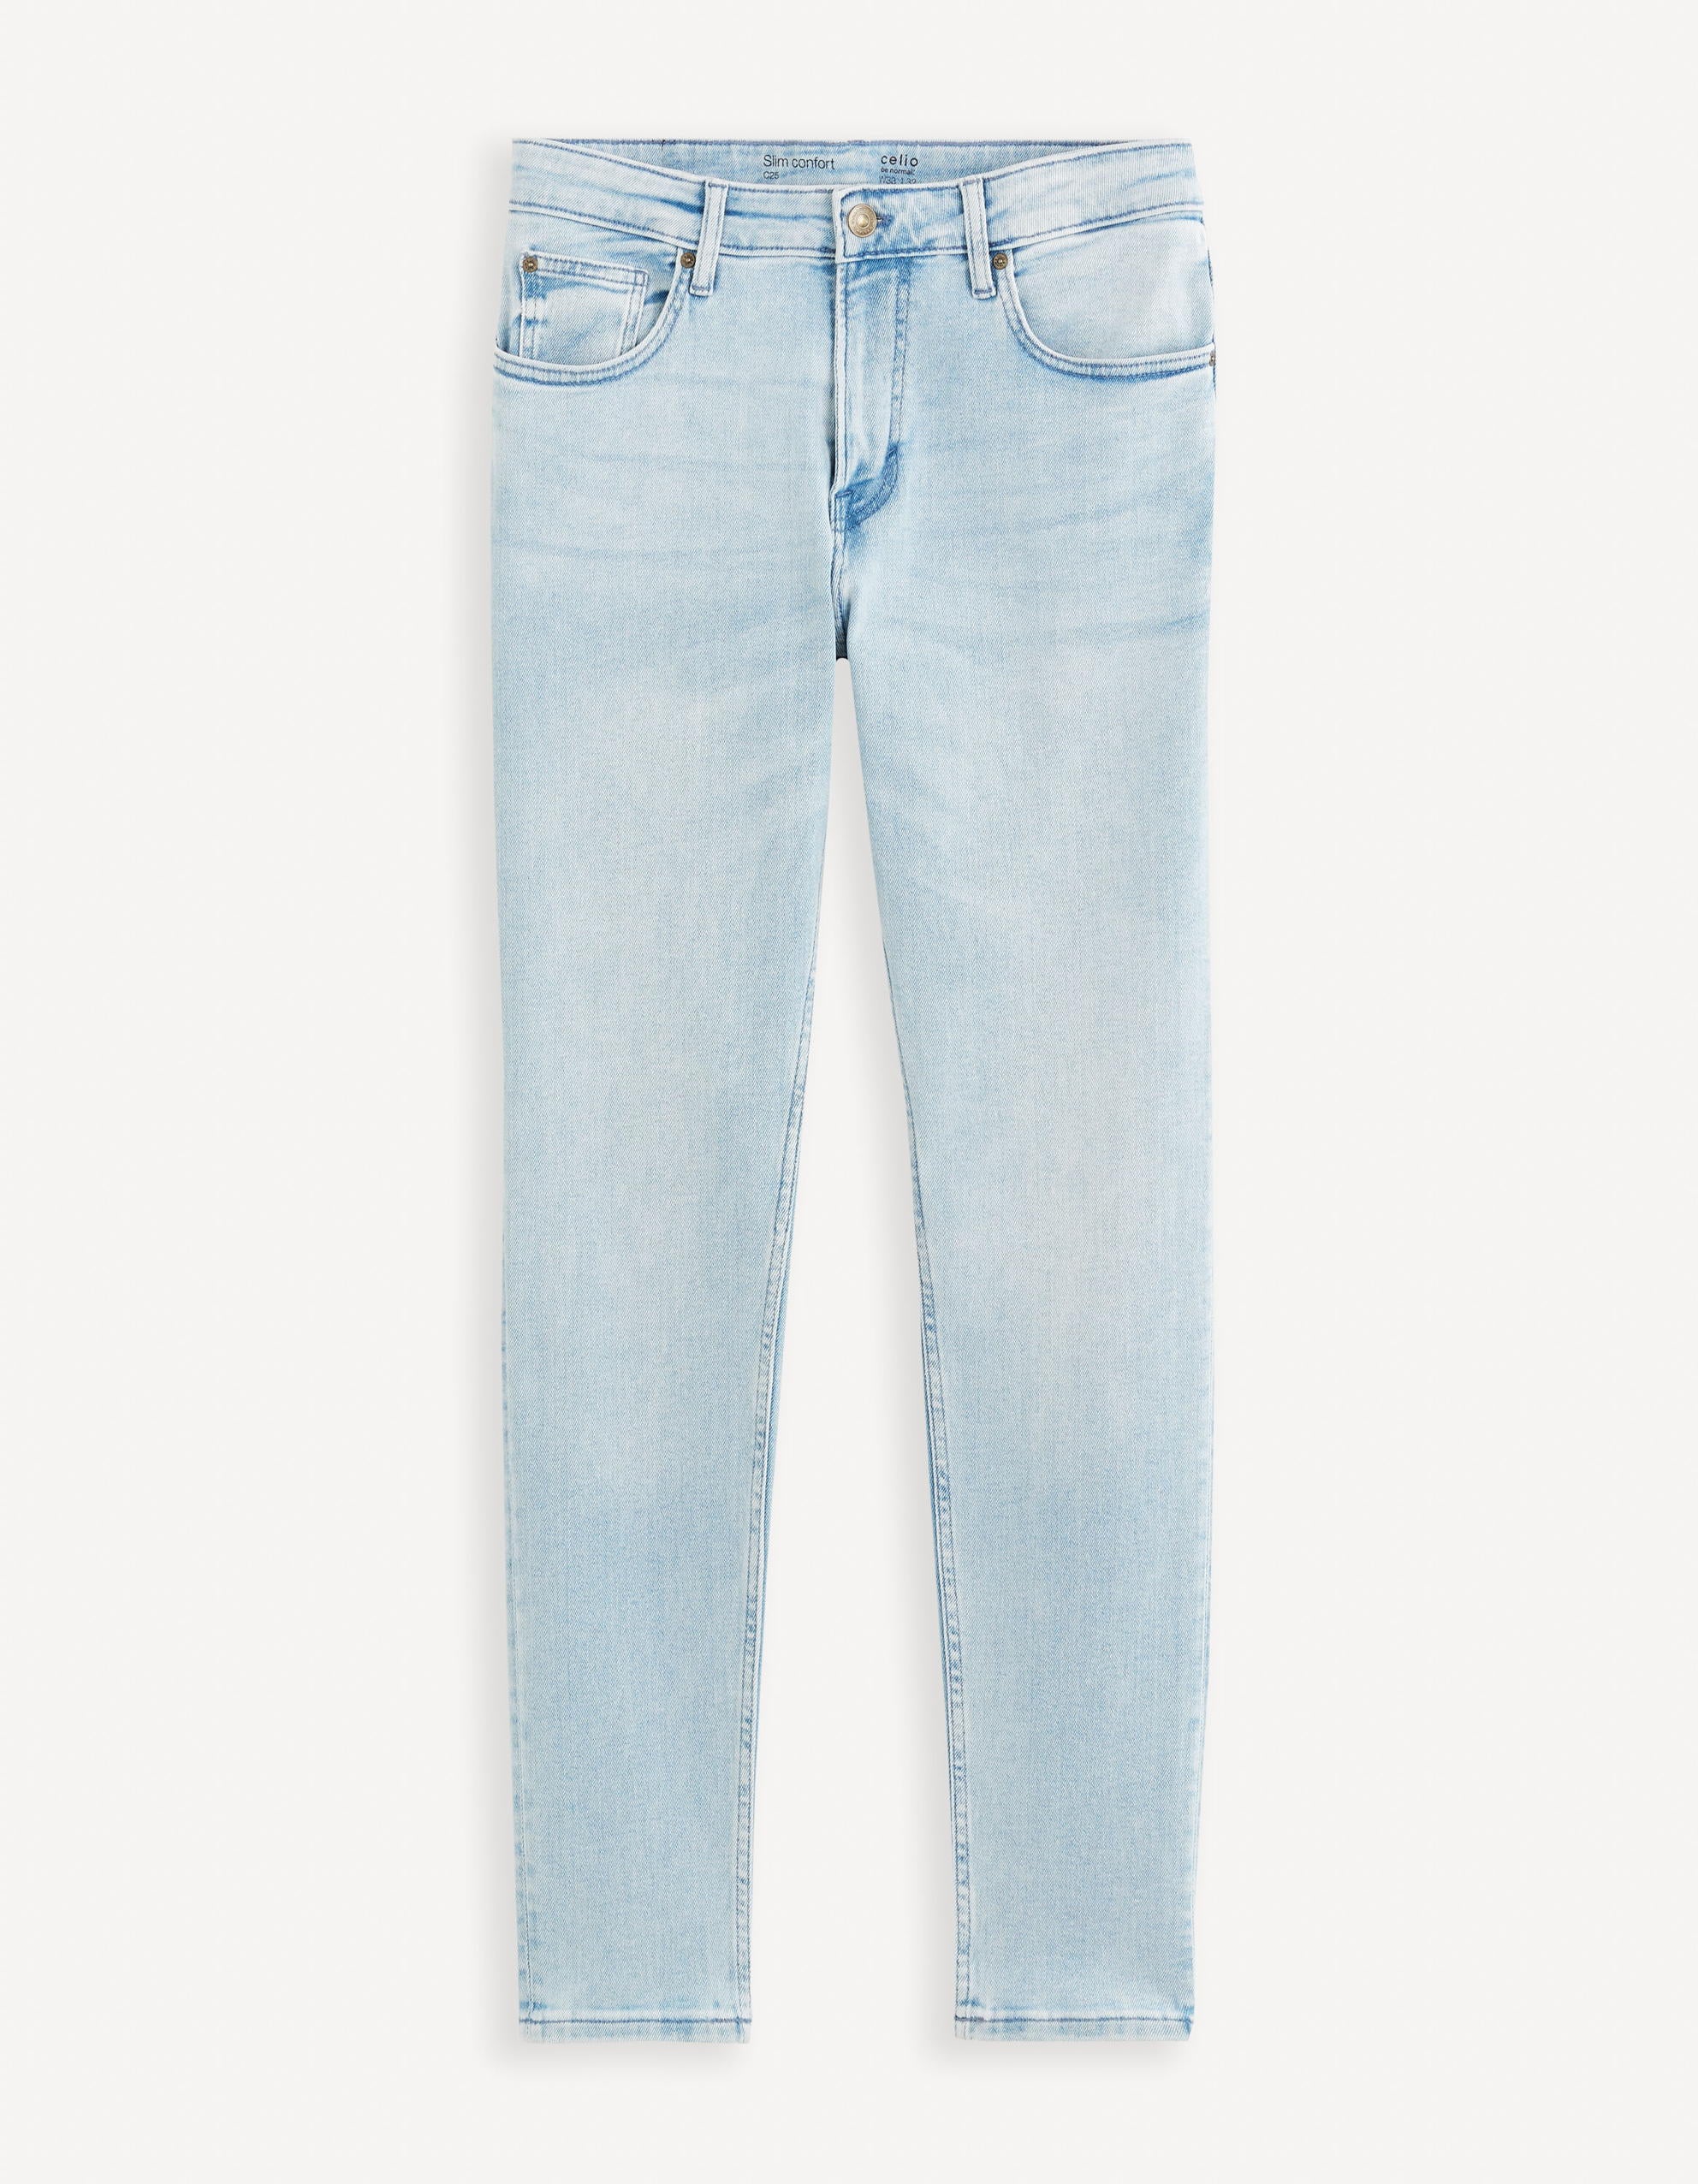 C25 Slim Jeans 3 Lengths Stretch - Bleached_SLIM3L_BLEACHED_01